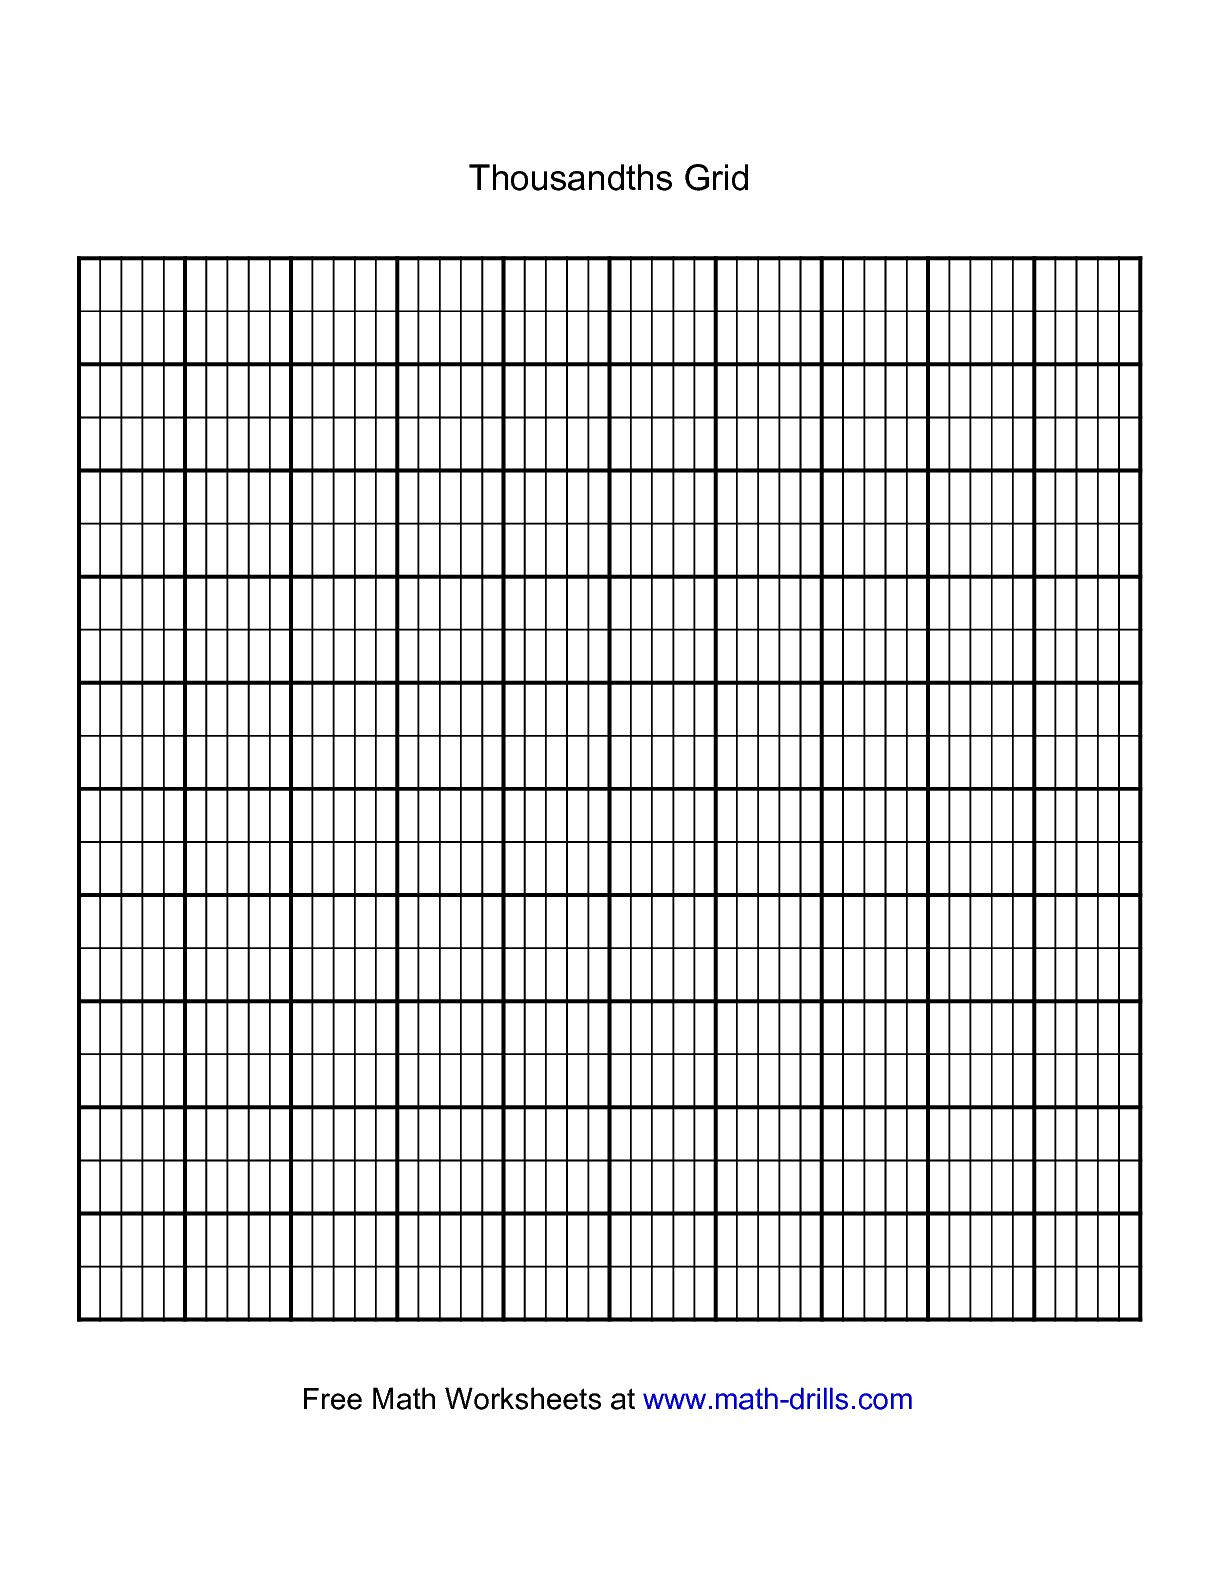 8 Best Images of Math Grid Worksheets - Quadrant 1 Coordinate Graph